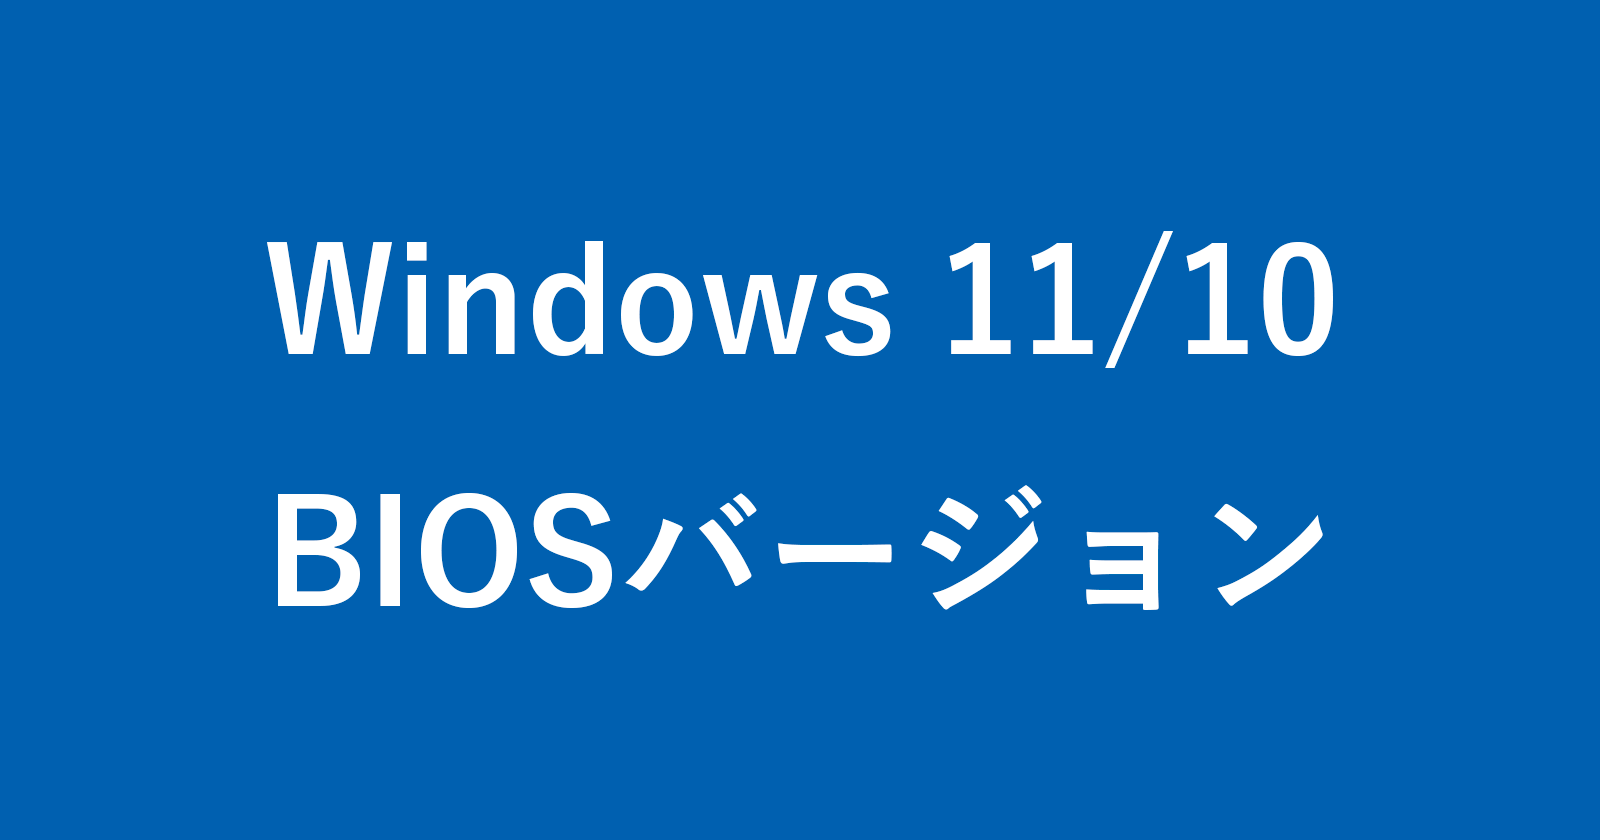 windows 11 10 bios version